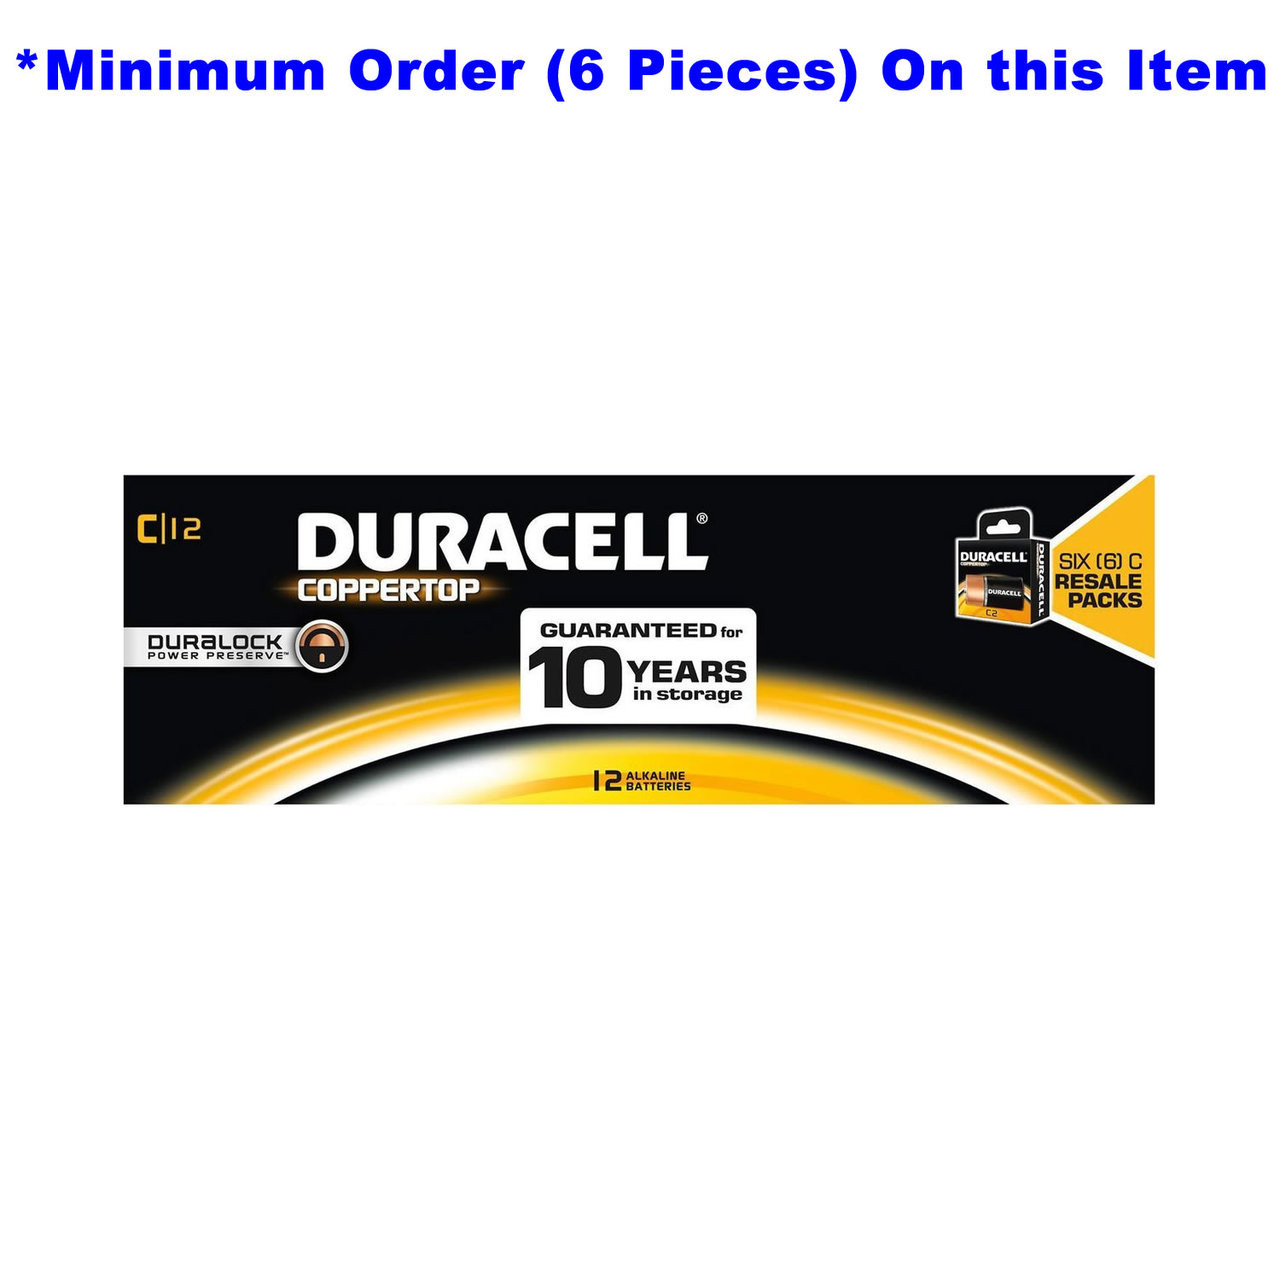 Duracell Coppertop C Batteries - Alkaline Resale 12 Pack - MN1400